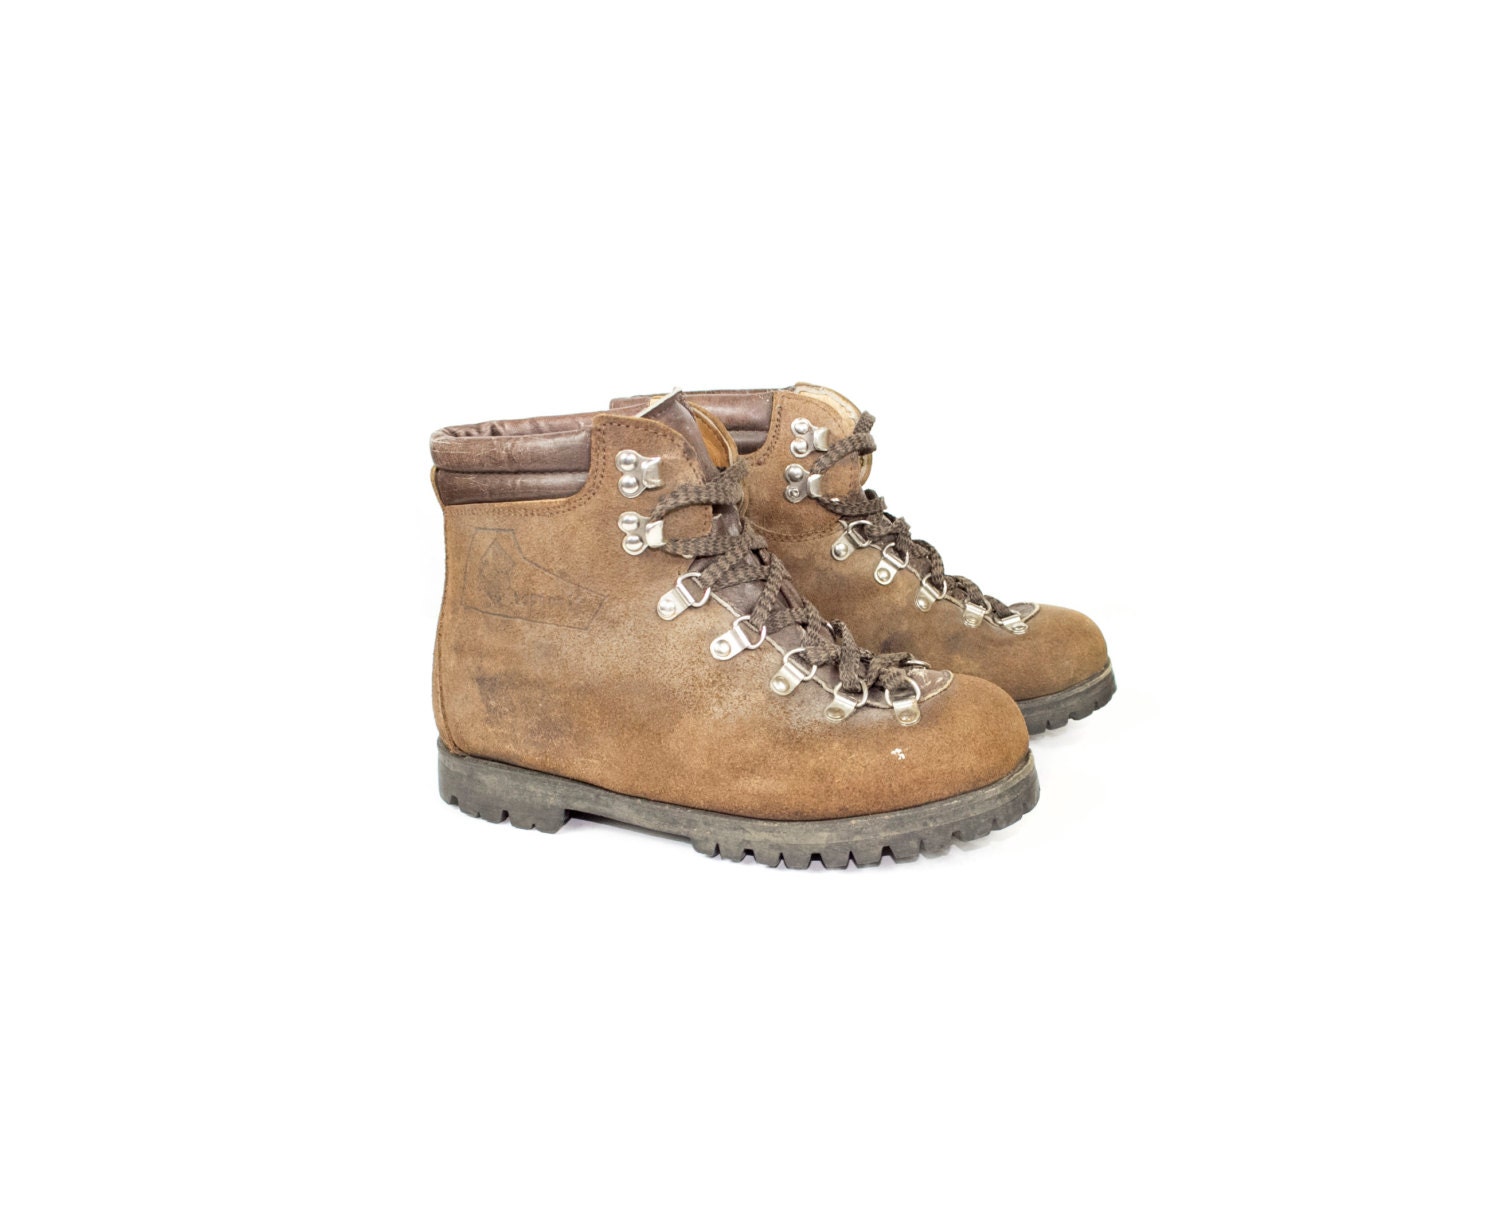 Summit Italian leather hiking boots / alico / vintage / hand